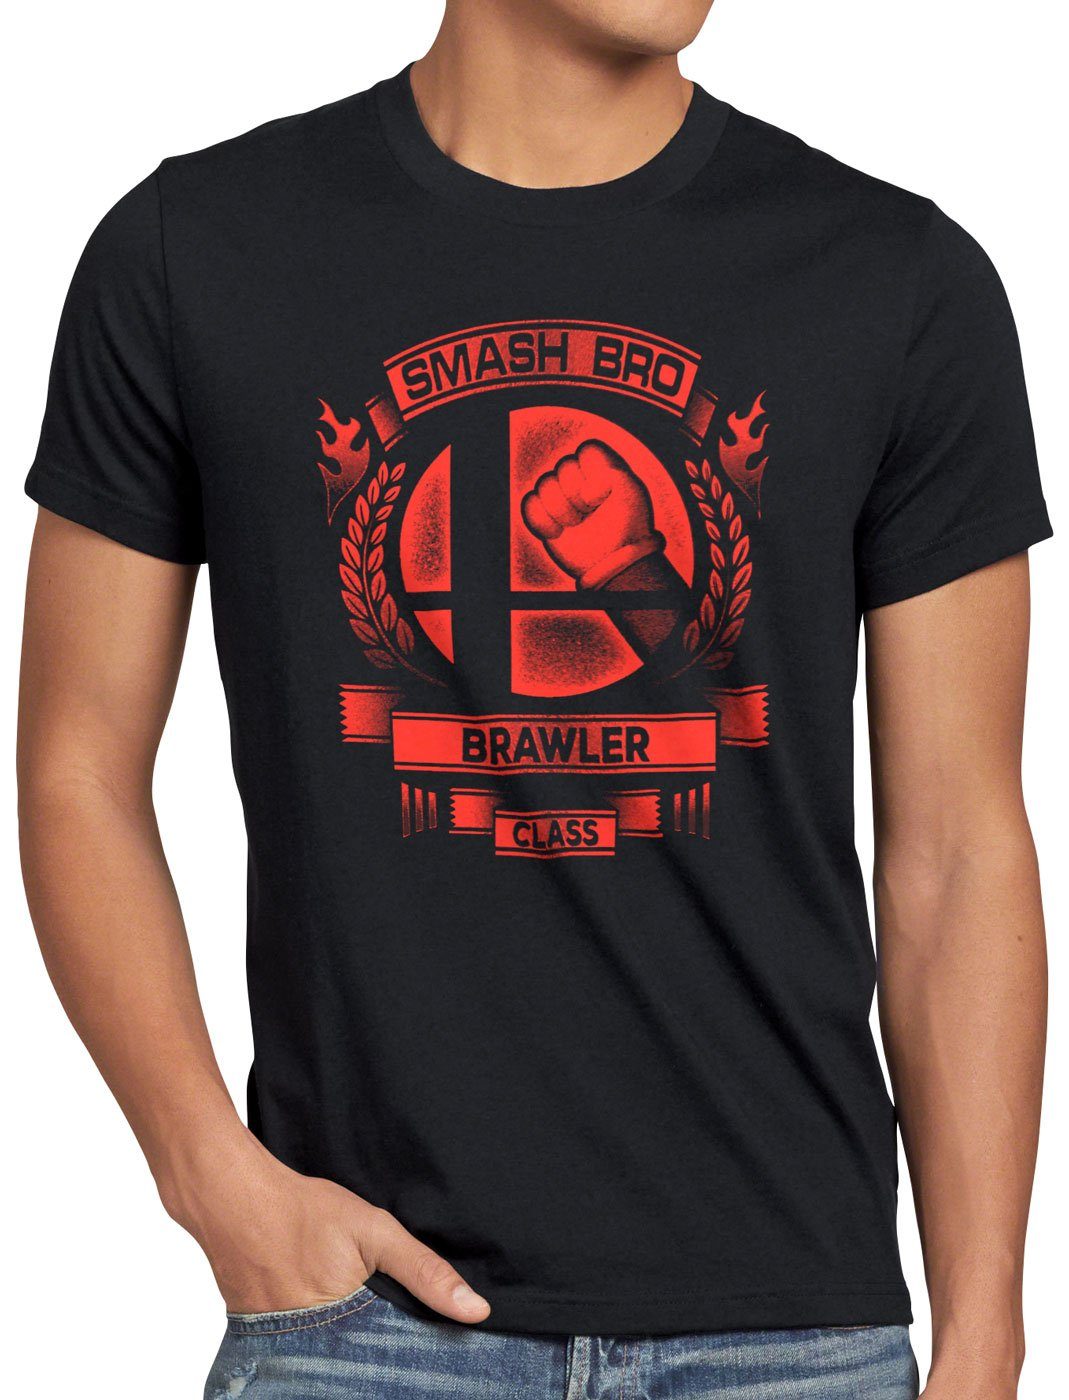 super Print-Shirt Brawler style3 brothers schwarz switch Herren T-Shirt Smash ultimate